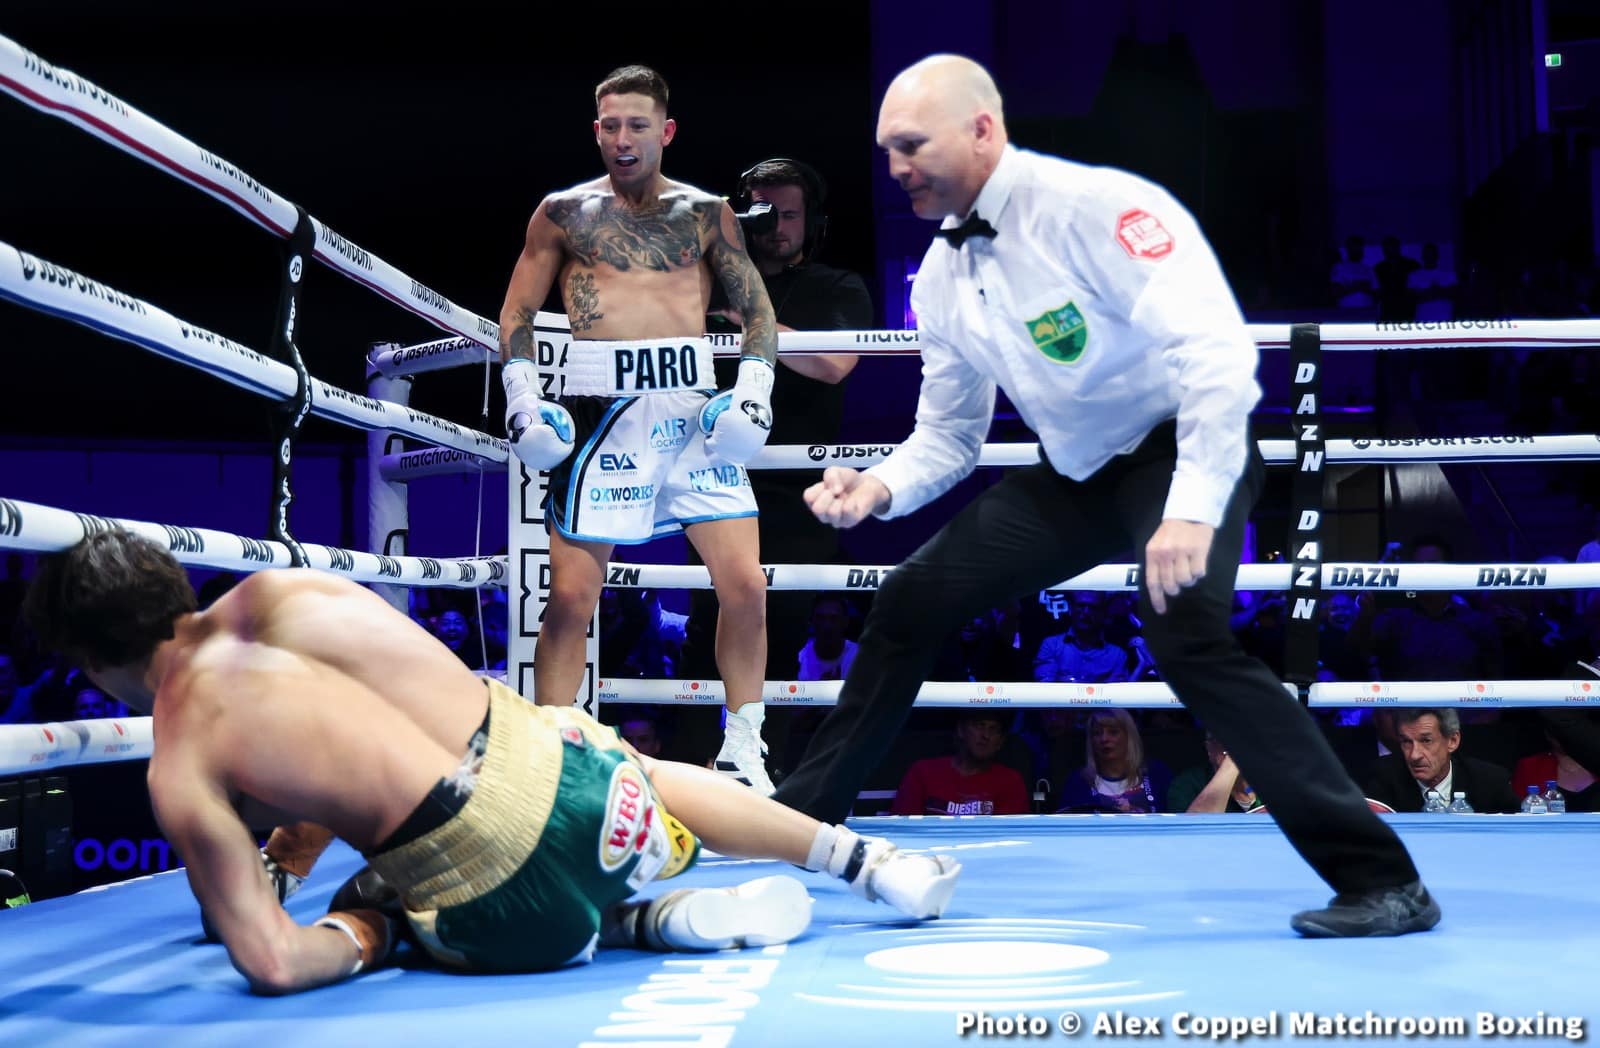 Image: Boxing Results: WBO Global Super Light Champ Paro KO’s Jarvis!